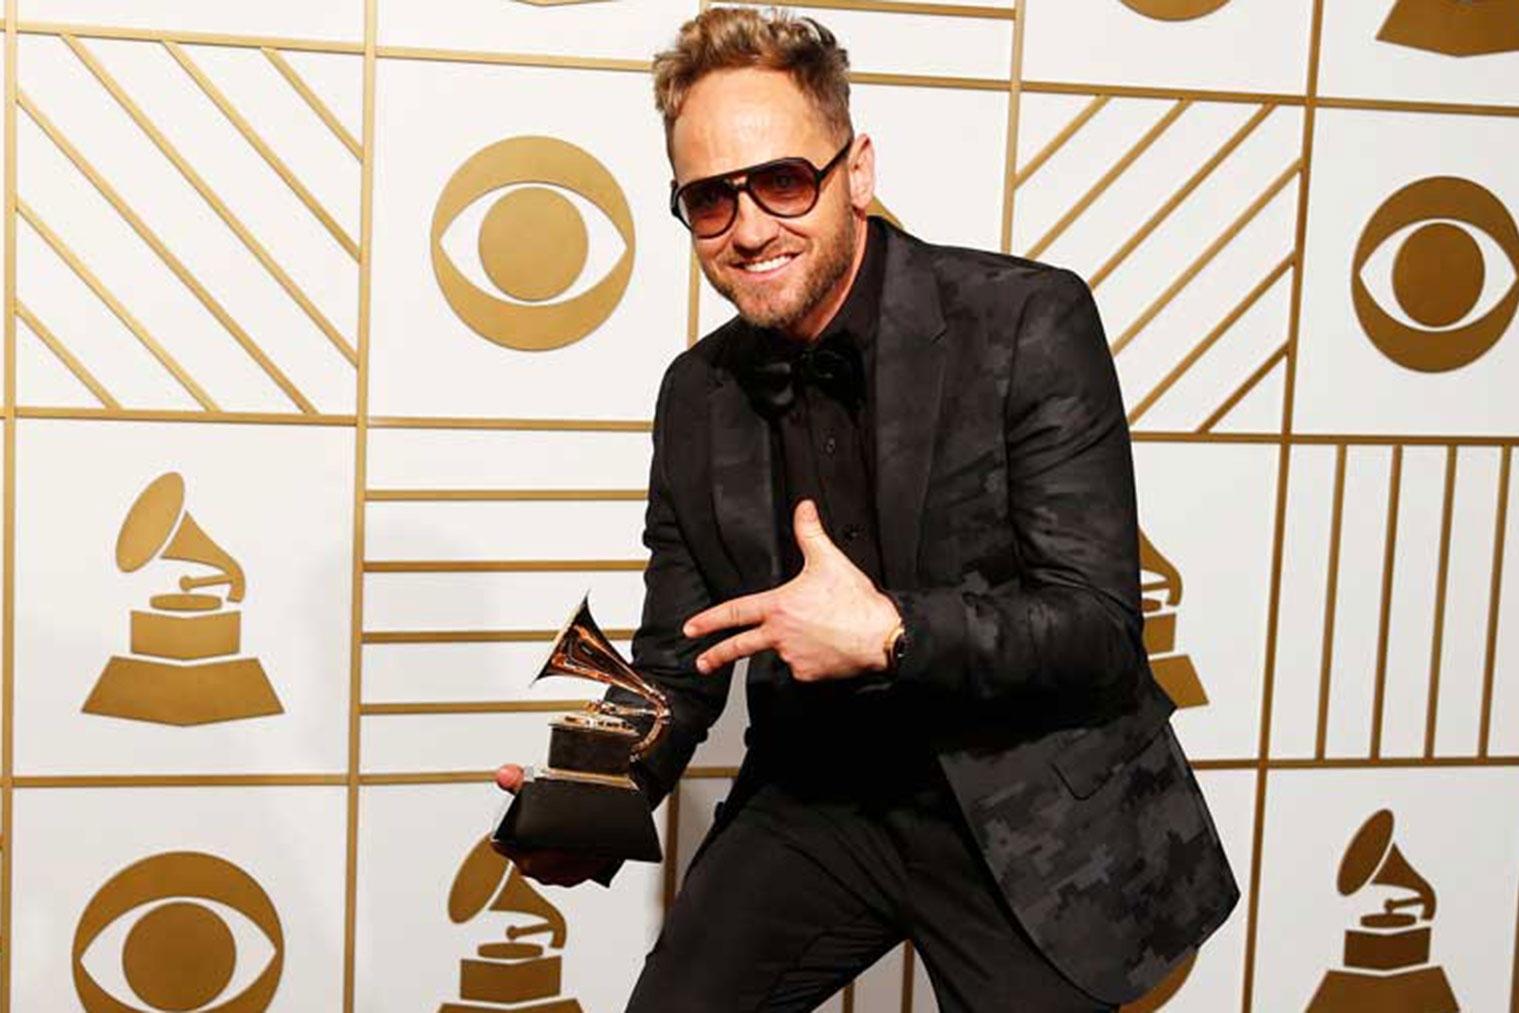 Alumnus TobyMac wins big at 58th Grammy Awards » Liberty News